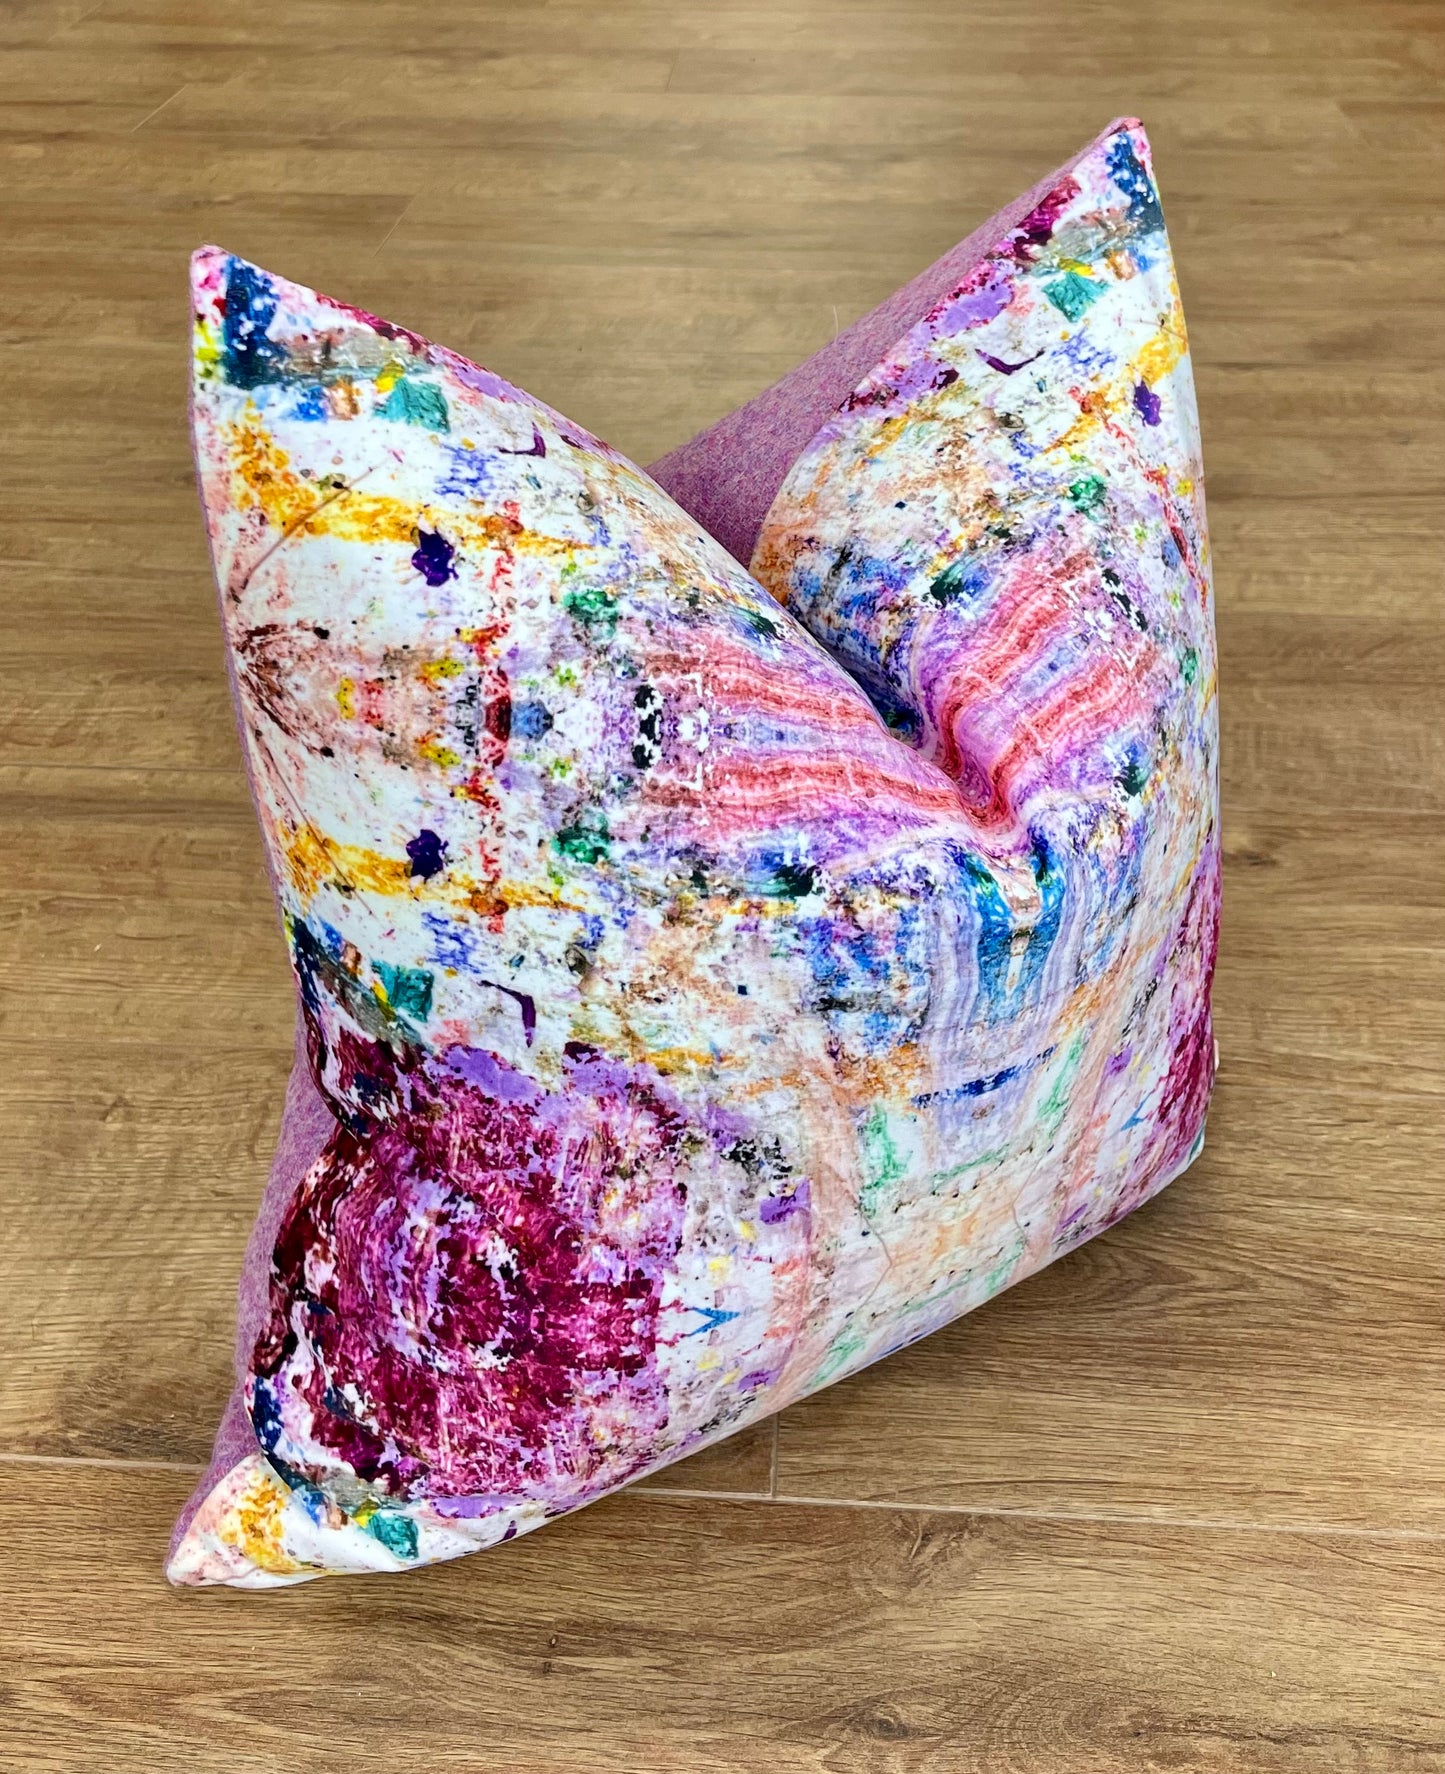 Paint Spray Velvet and Pink Harris Tweed Cushion 18”